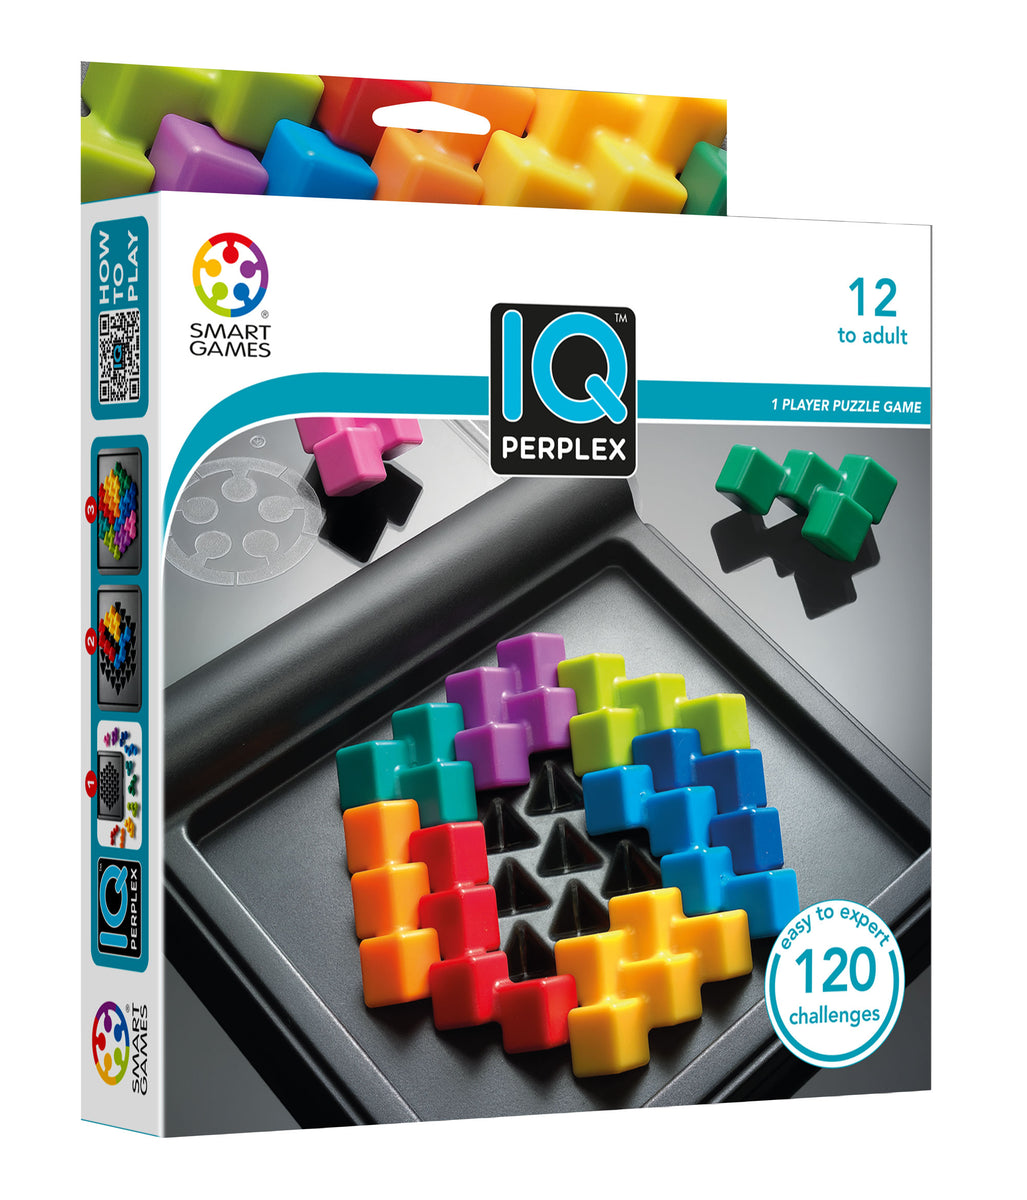 IQ Puzzler Pro & IQ XOXO Puzzle Game Bundle